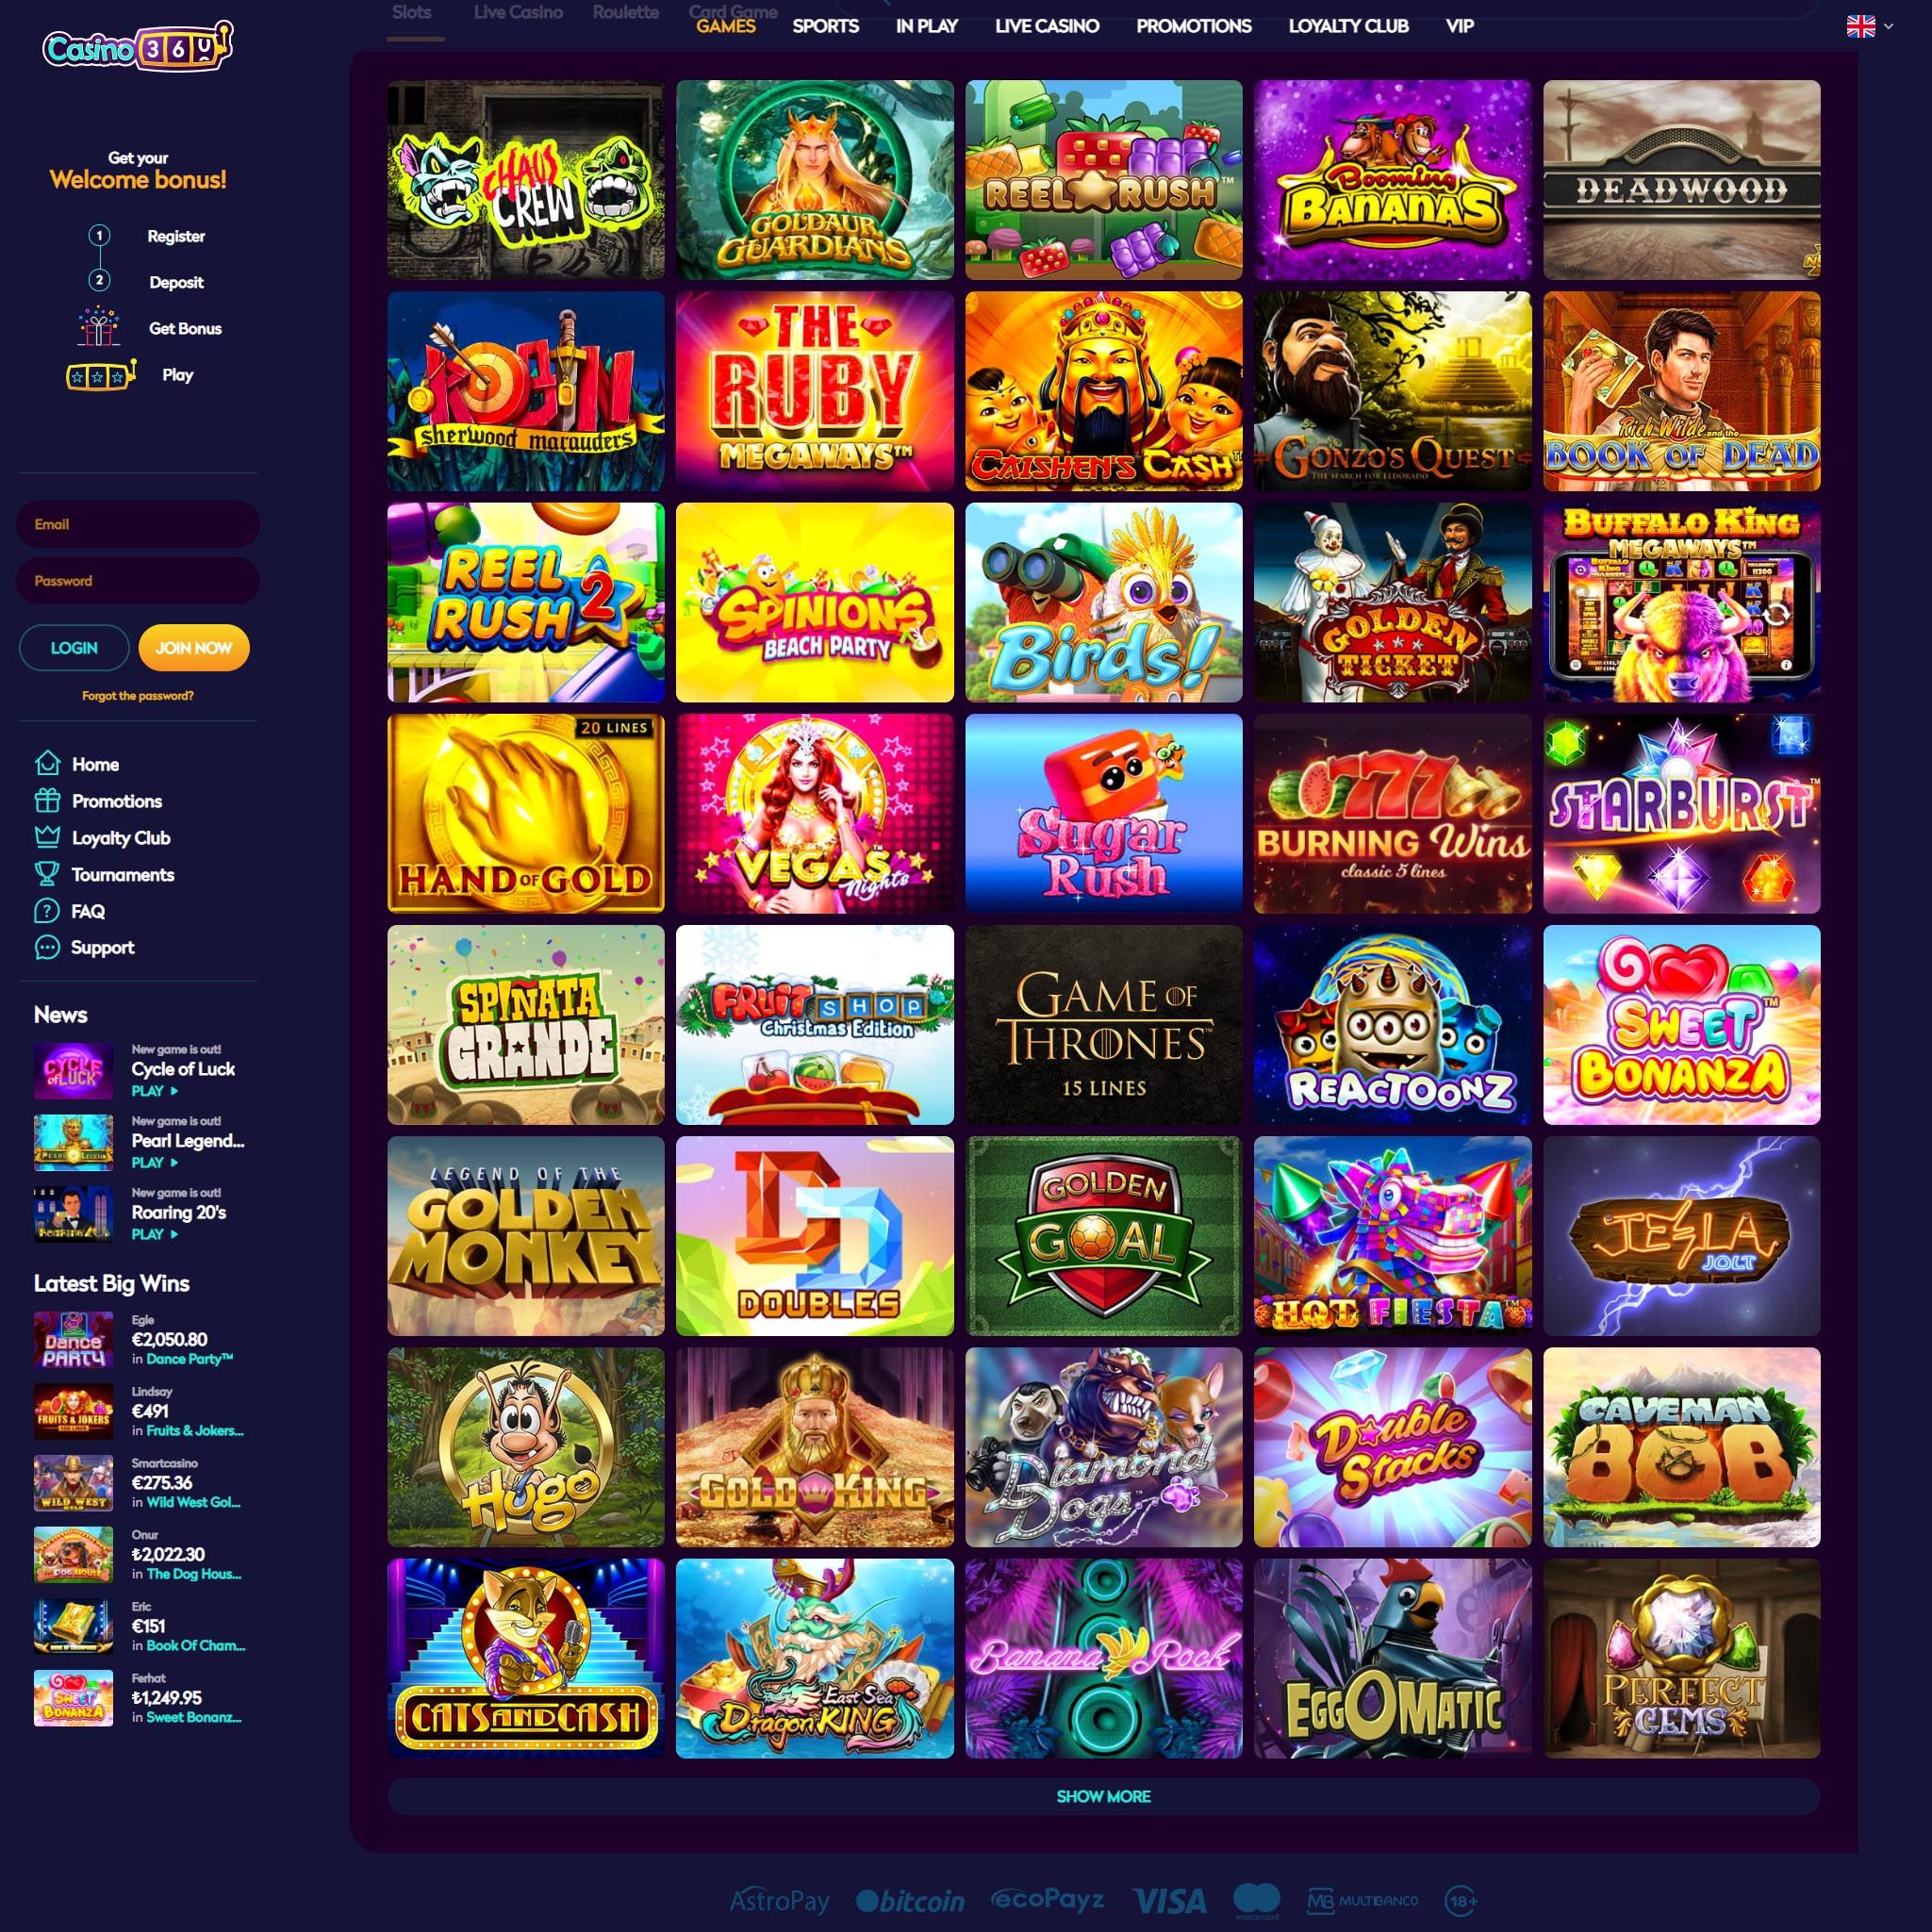 Casino360 full games catalogue